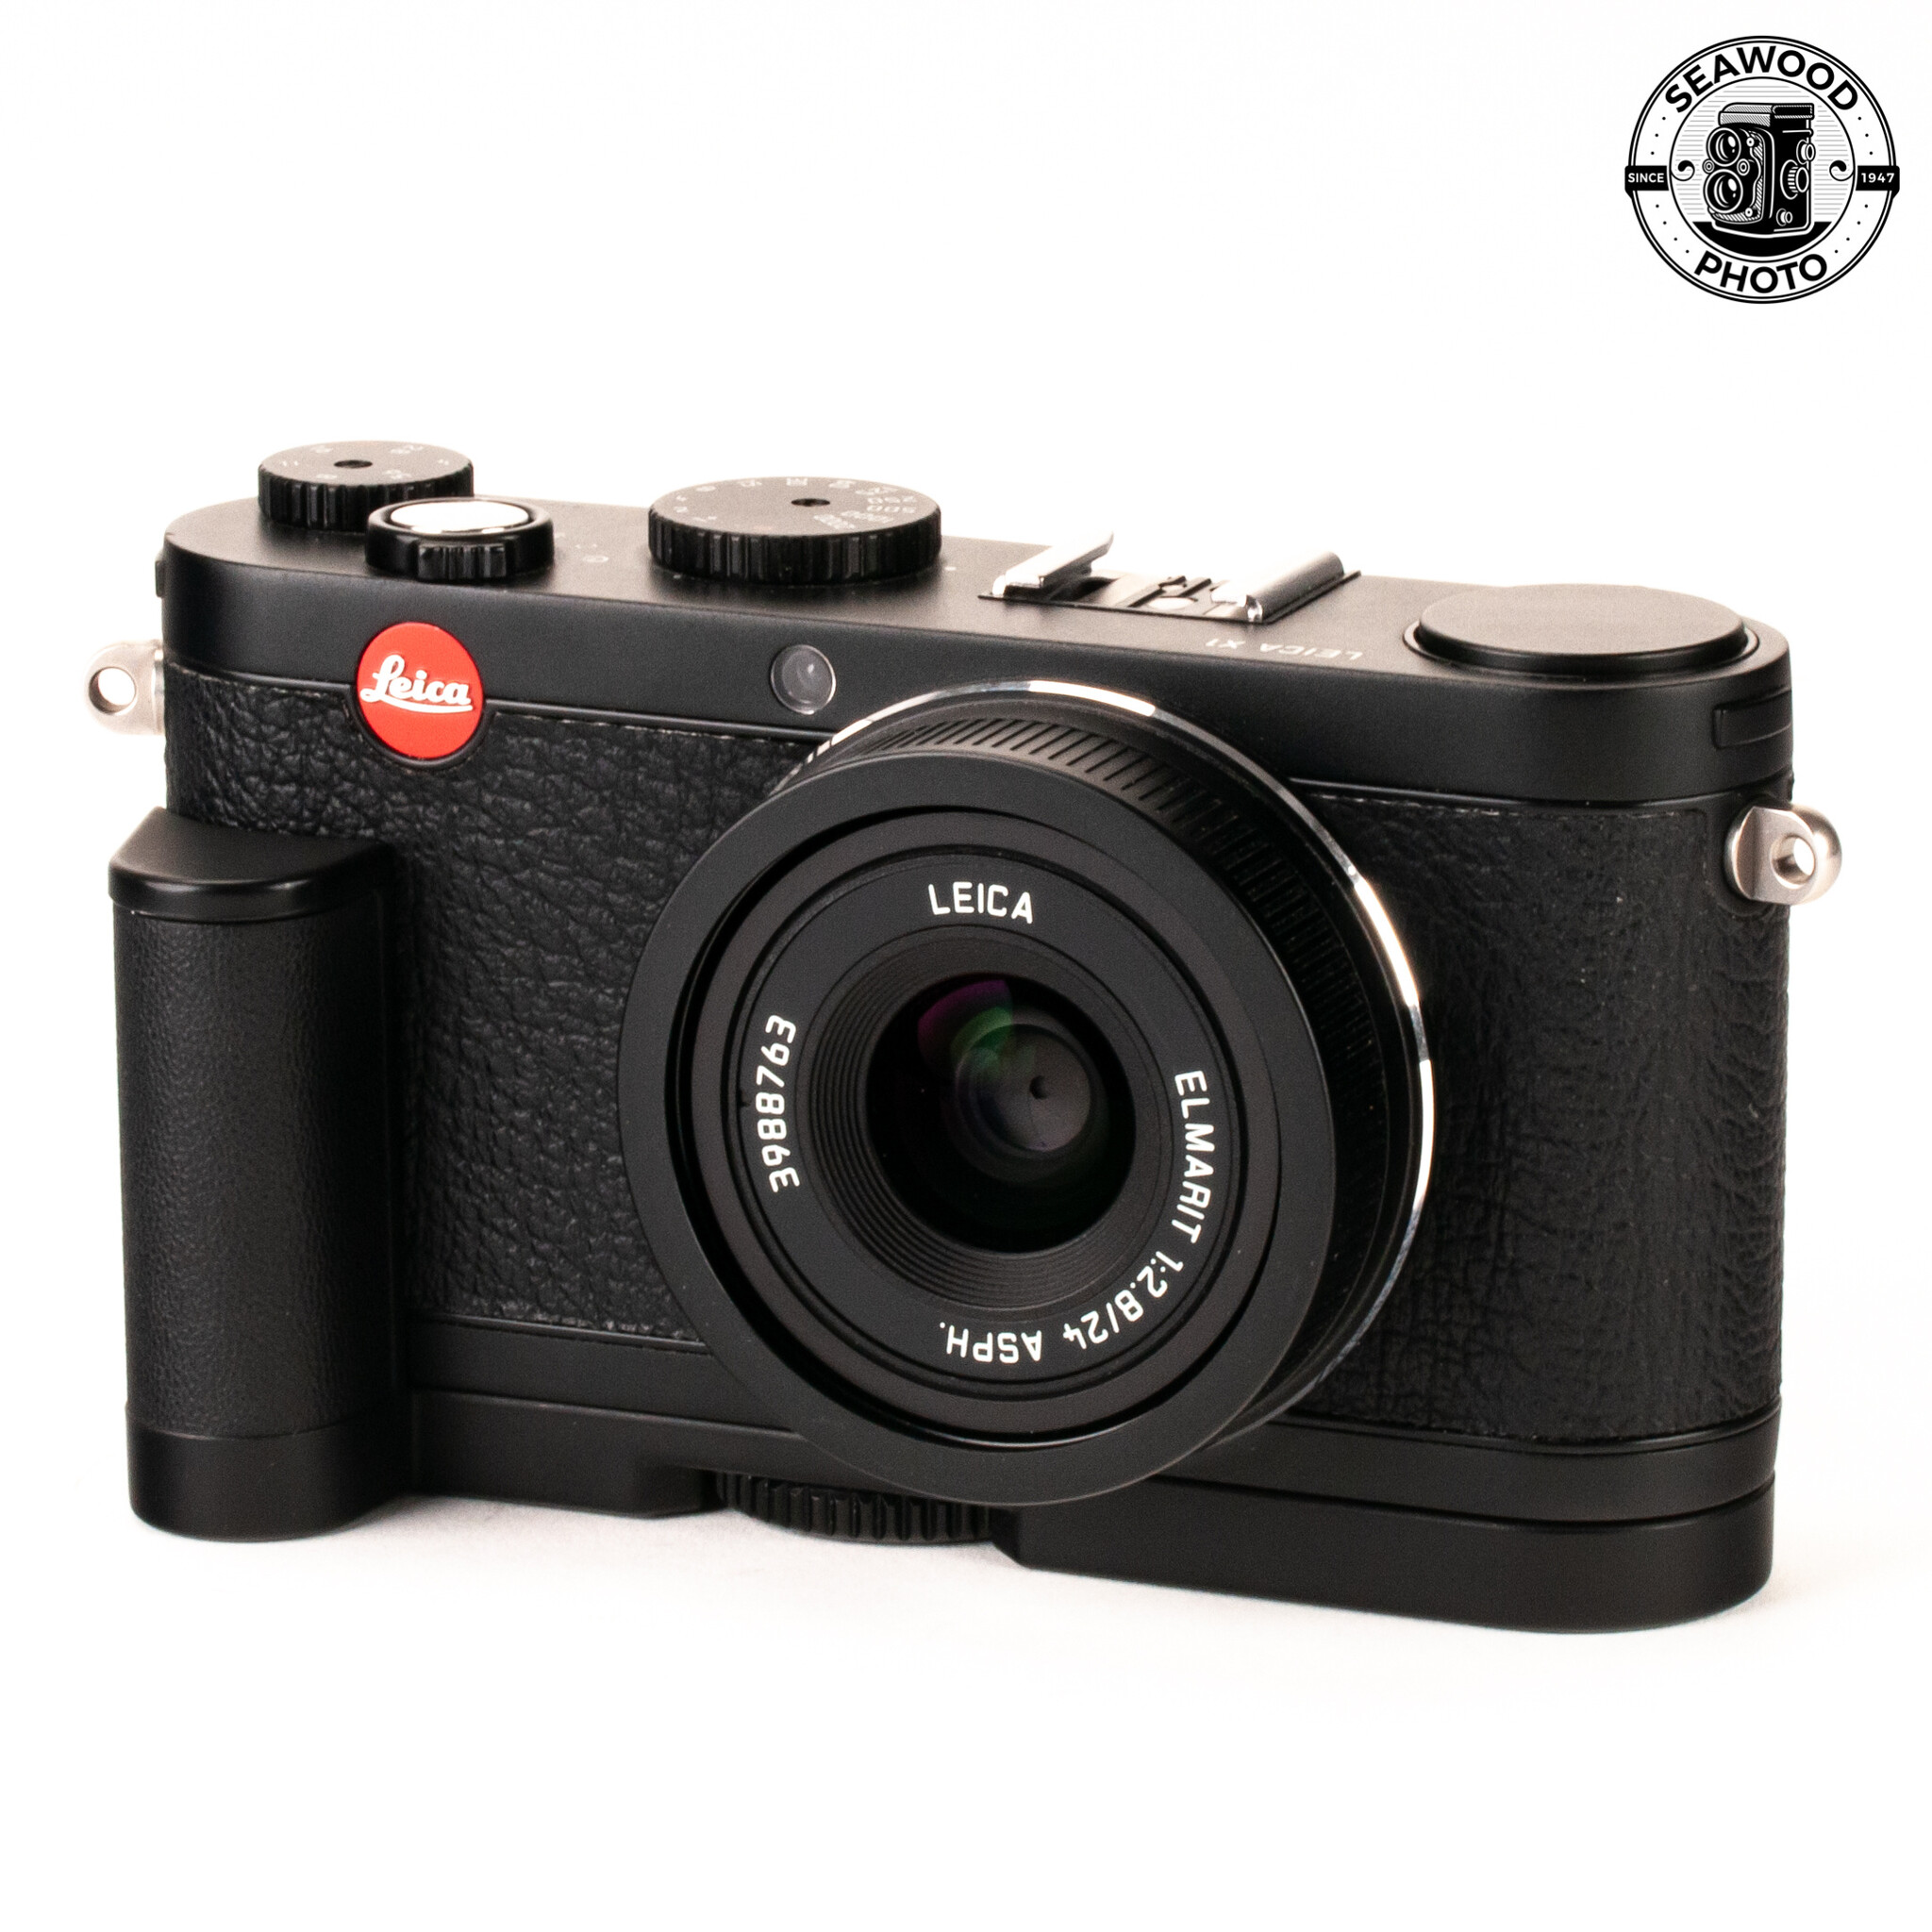 Leica X1 12.2MP Digital Camera Black w/ Grip GOOD+ - Seawood Photo